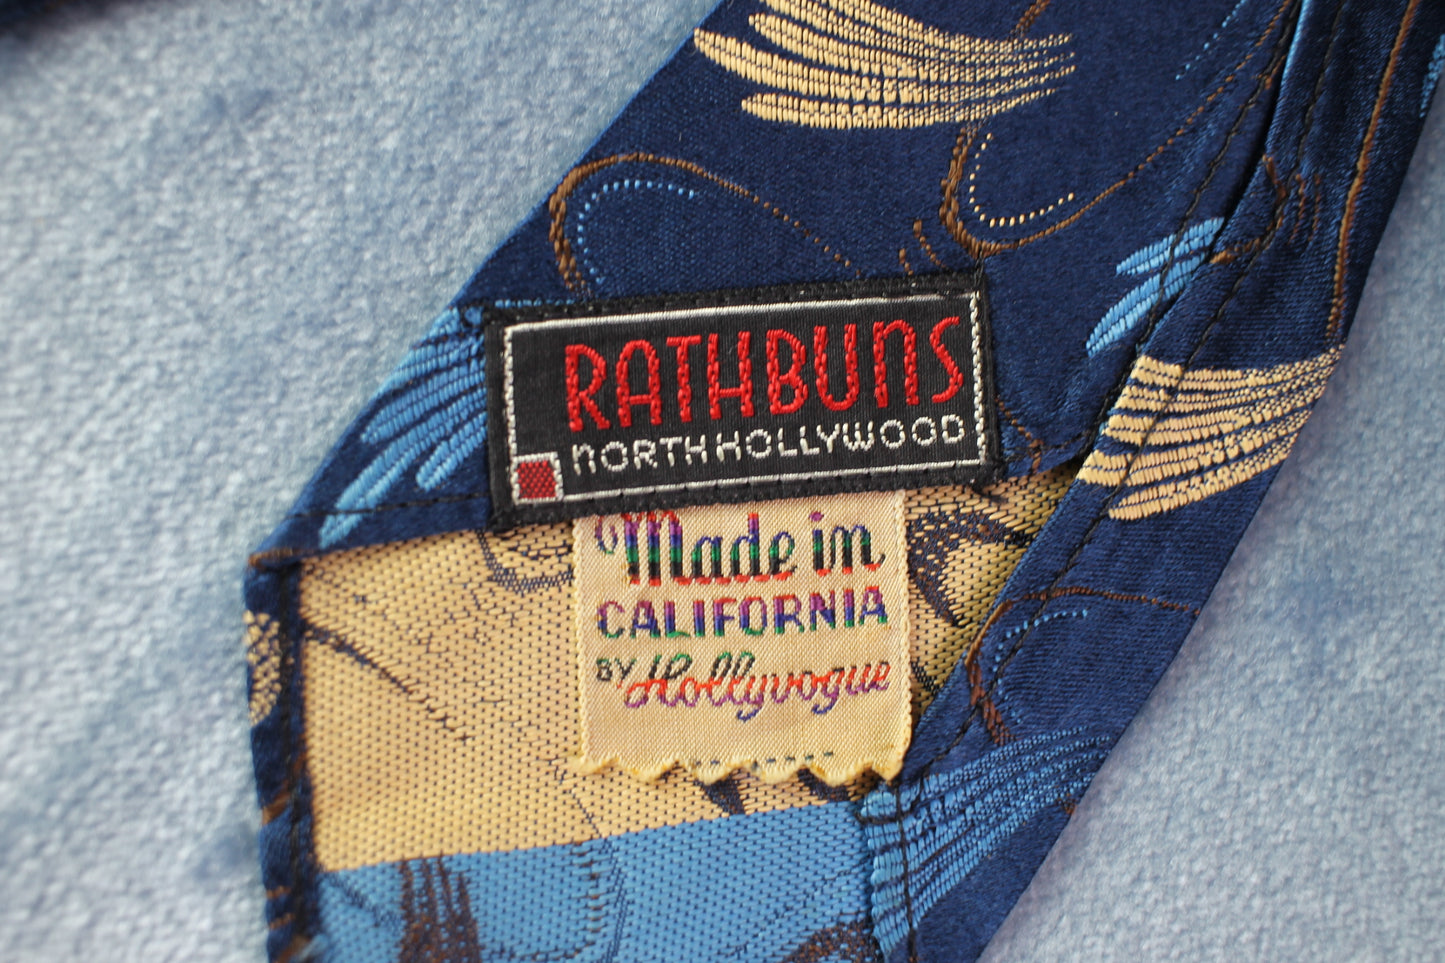 Vintage 1940s Rathbuns Hollywood blue gold copper pattern tie